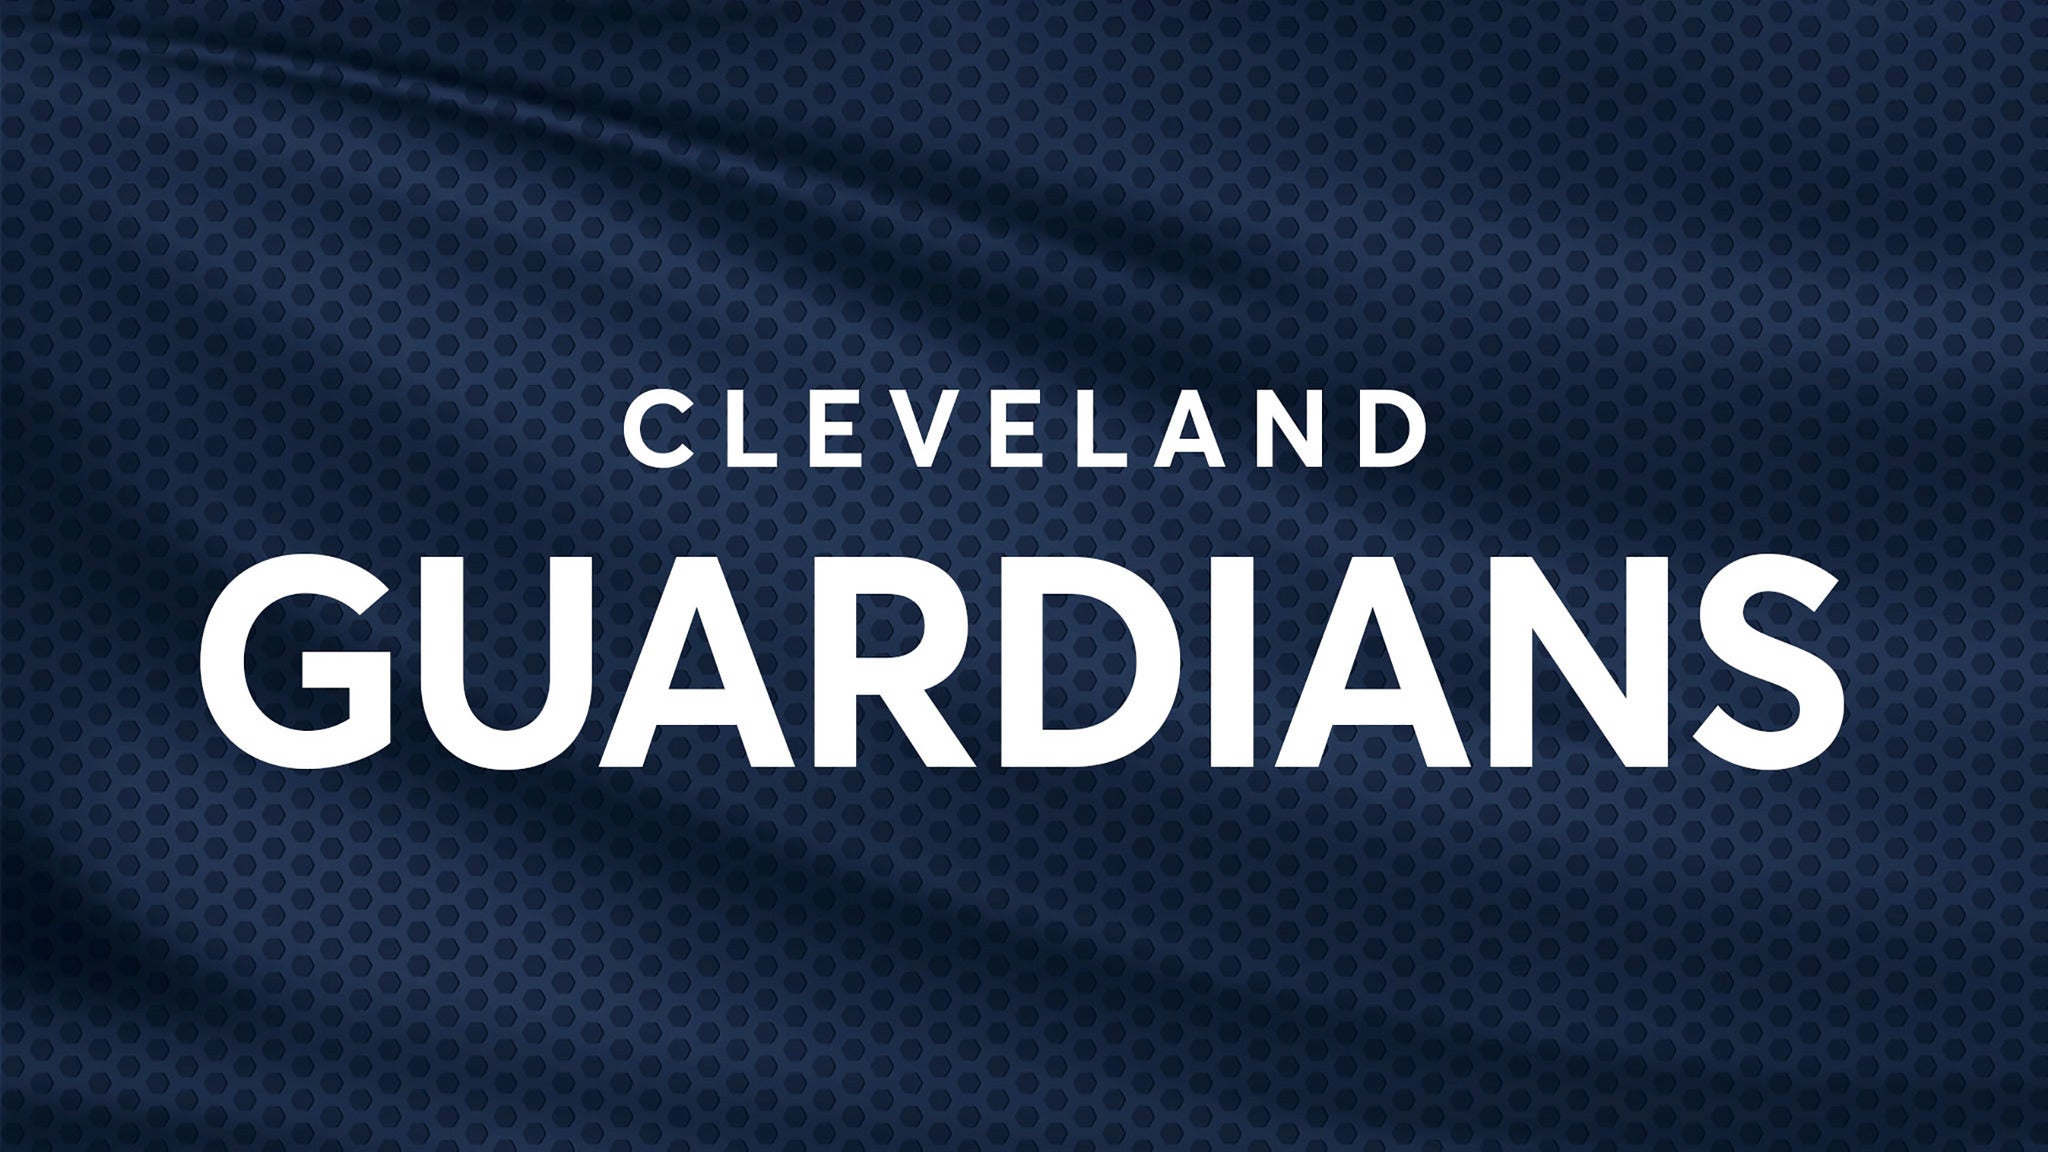 Cleveland Guardians vs. Kansas City Royals